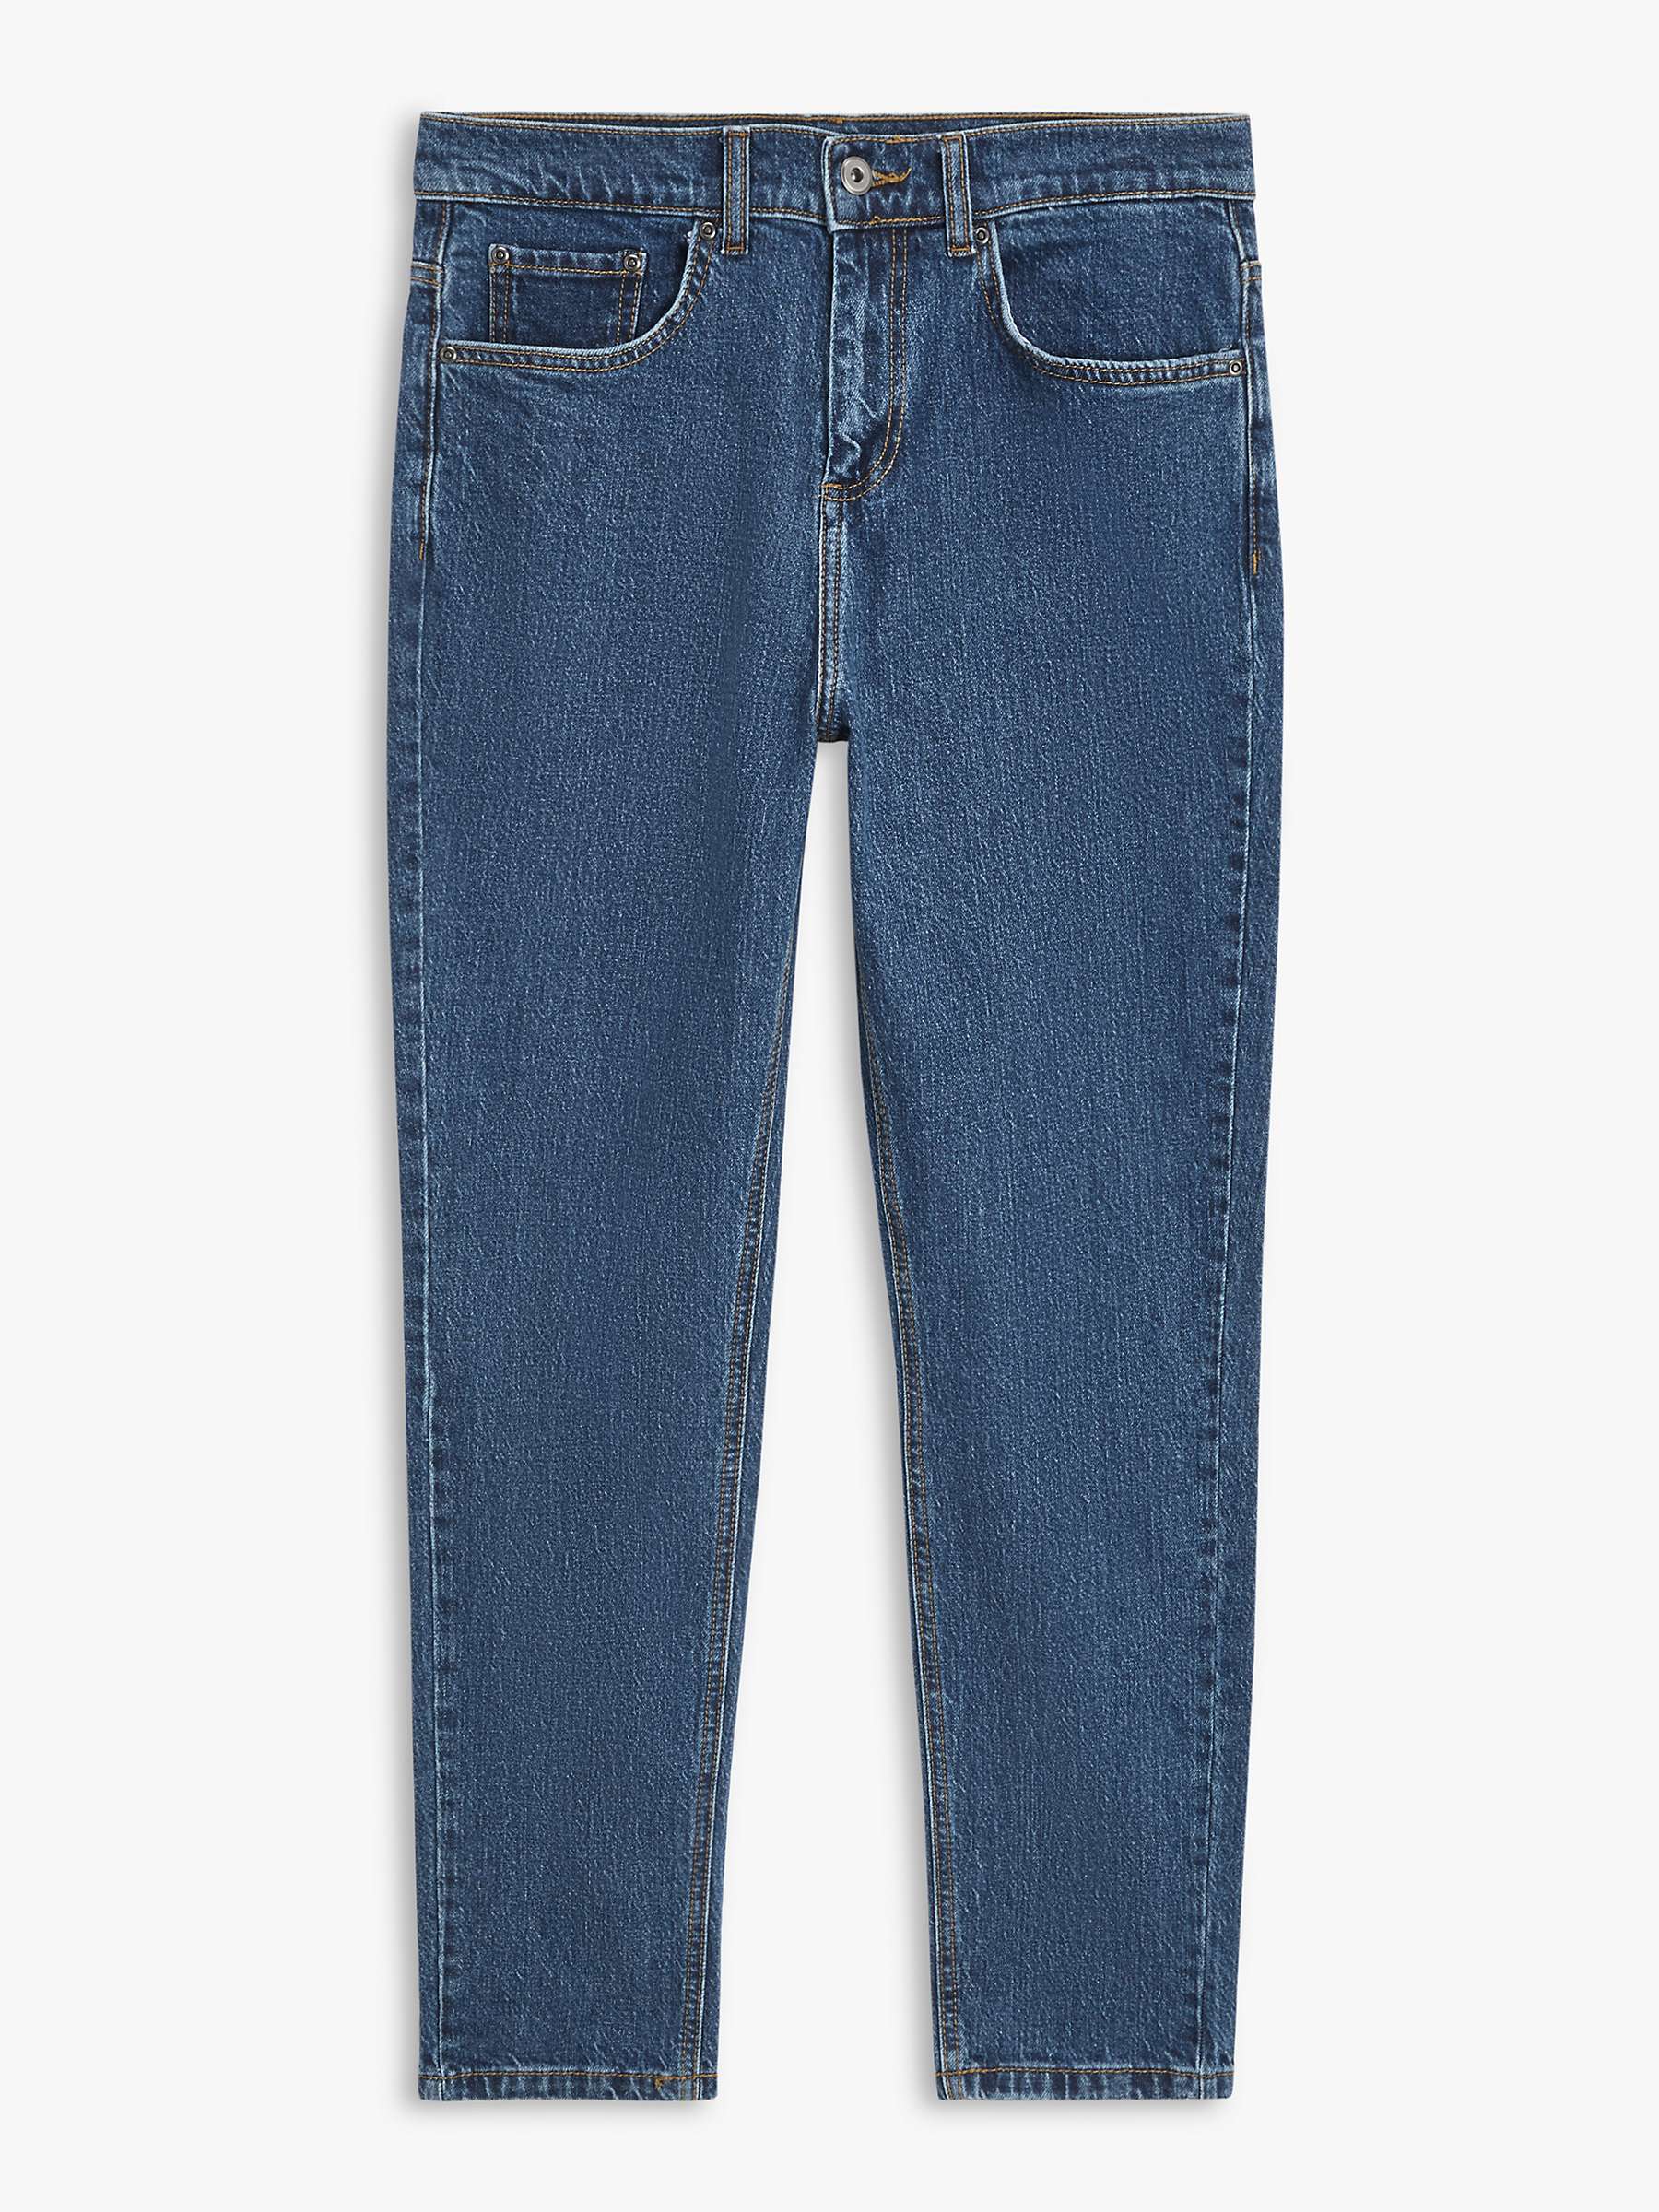 John Lewis ANYDAY Slim Fit Denim Jeans, Mid Wash at John Lewis & Partners